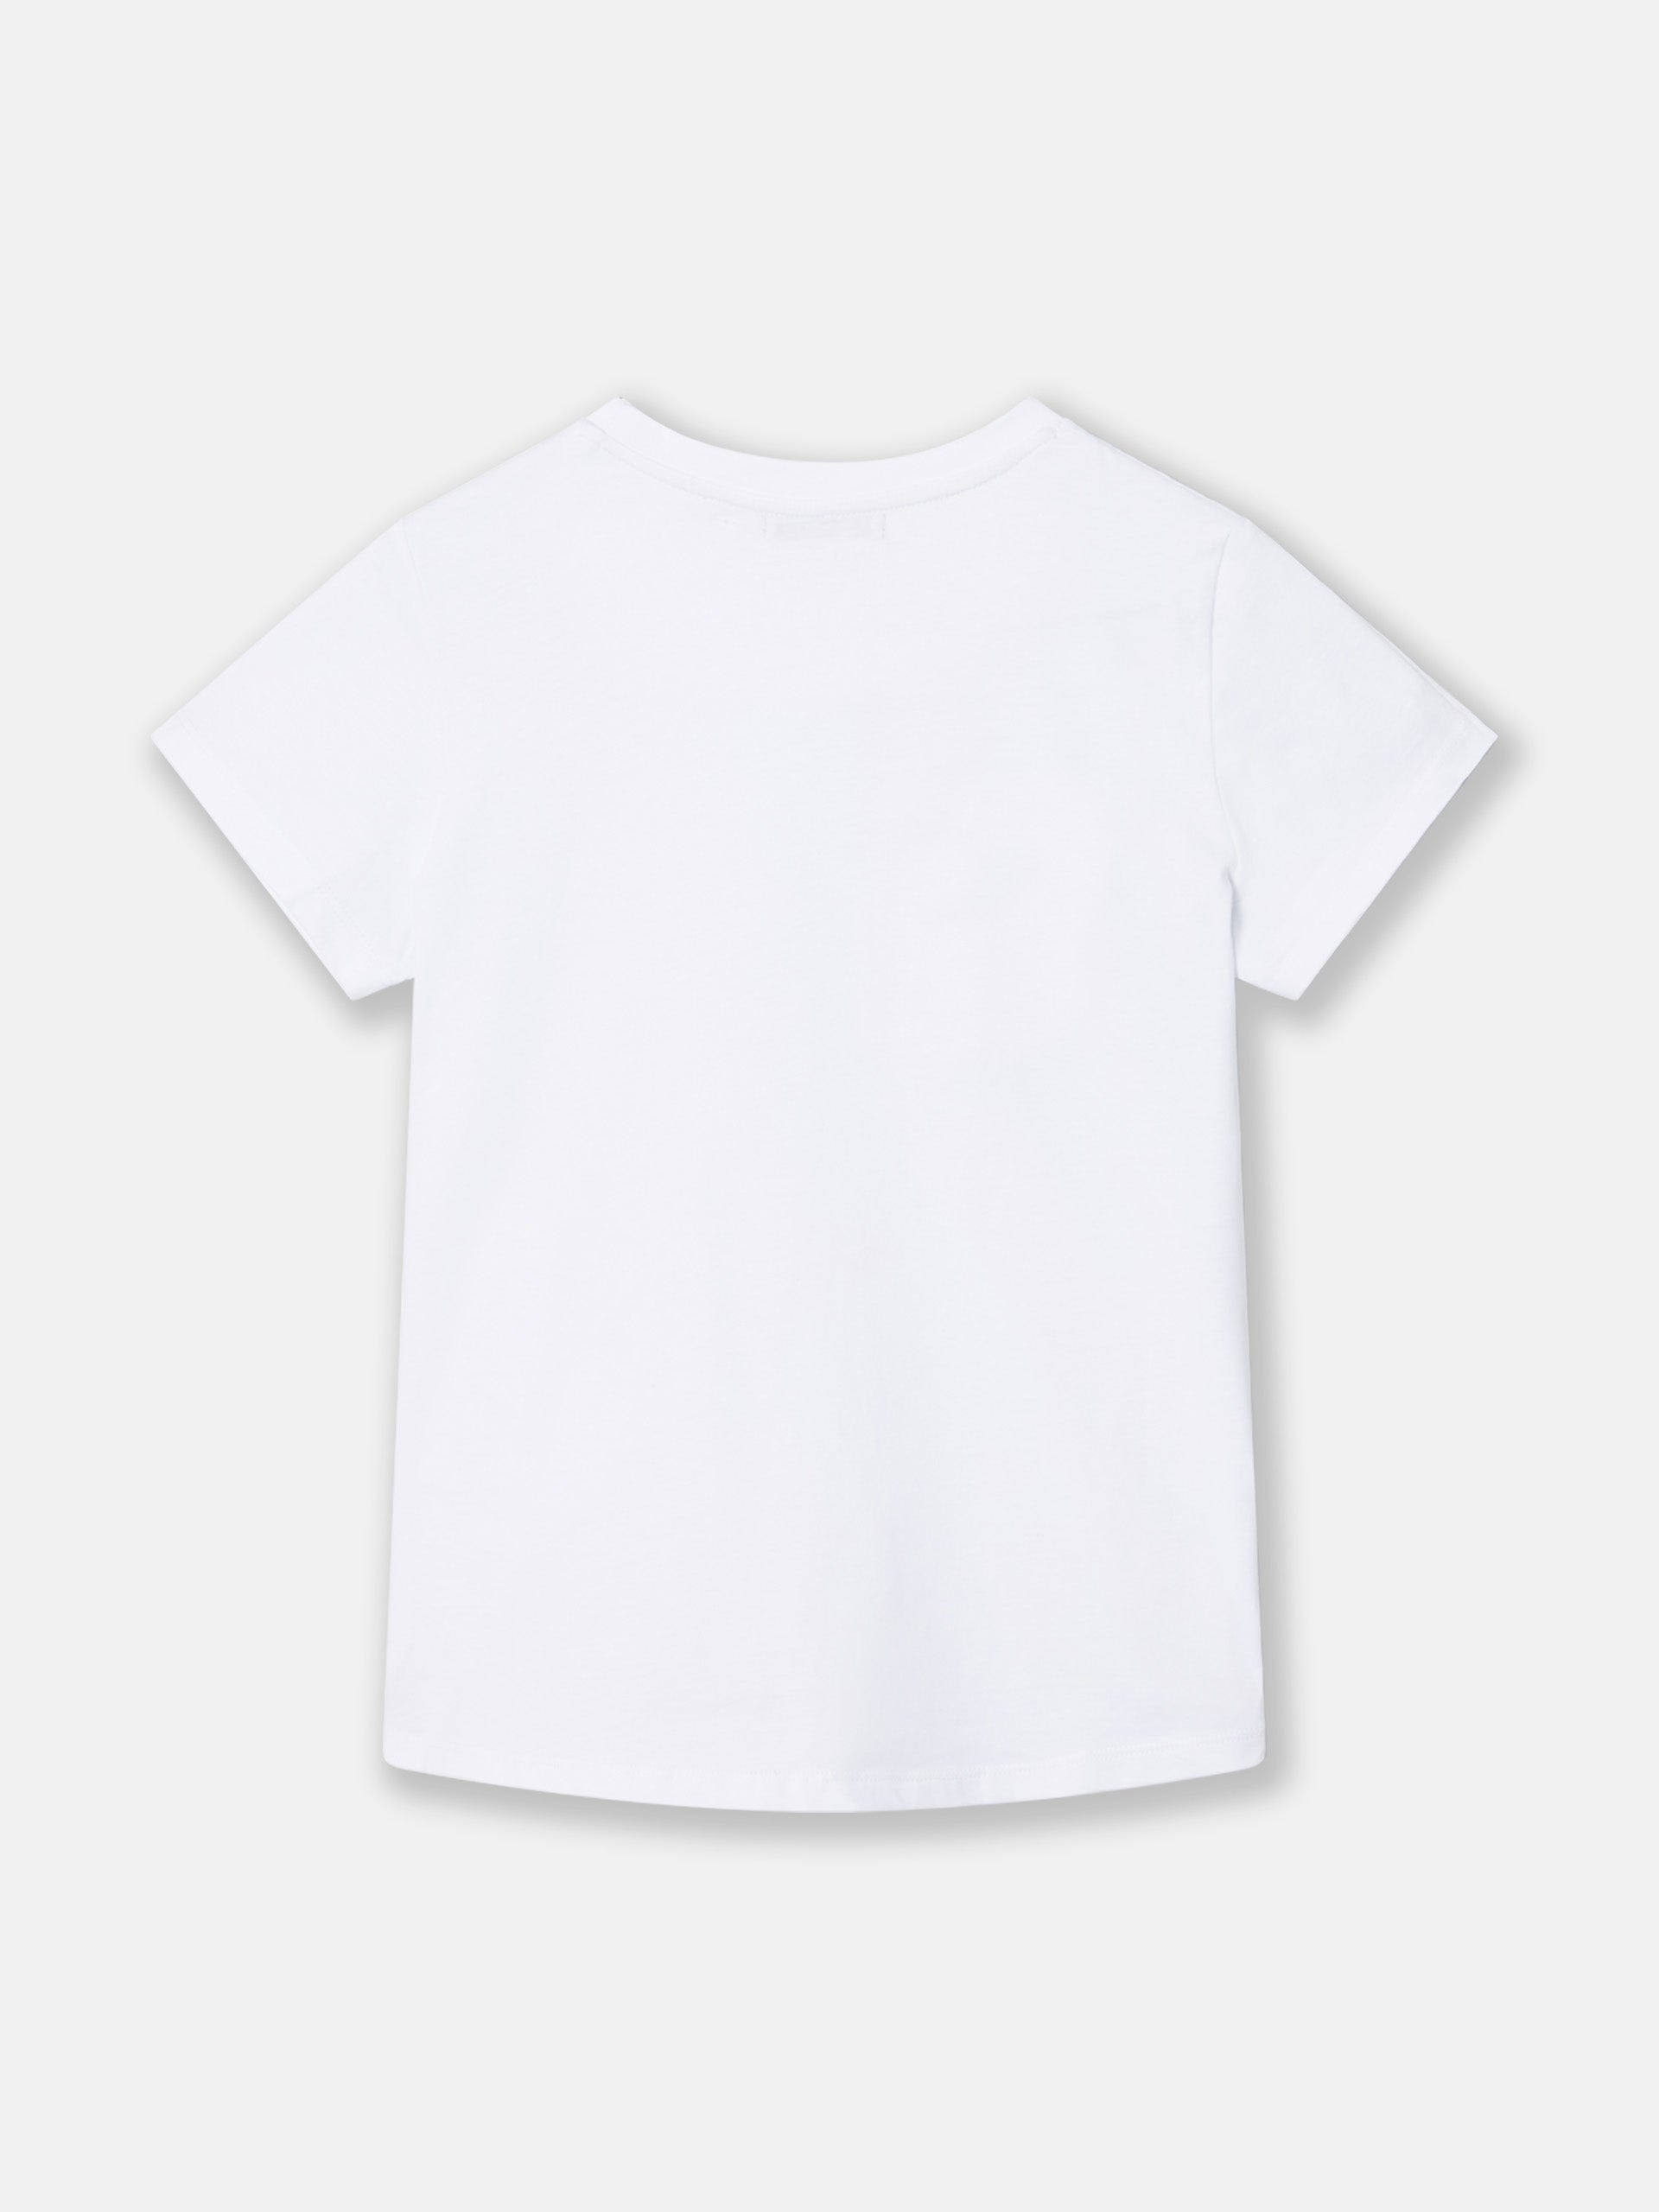 Camiseta woman silbon flores blanca